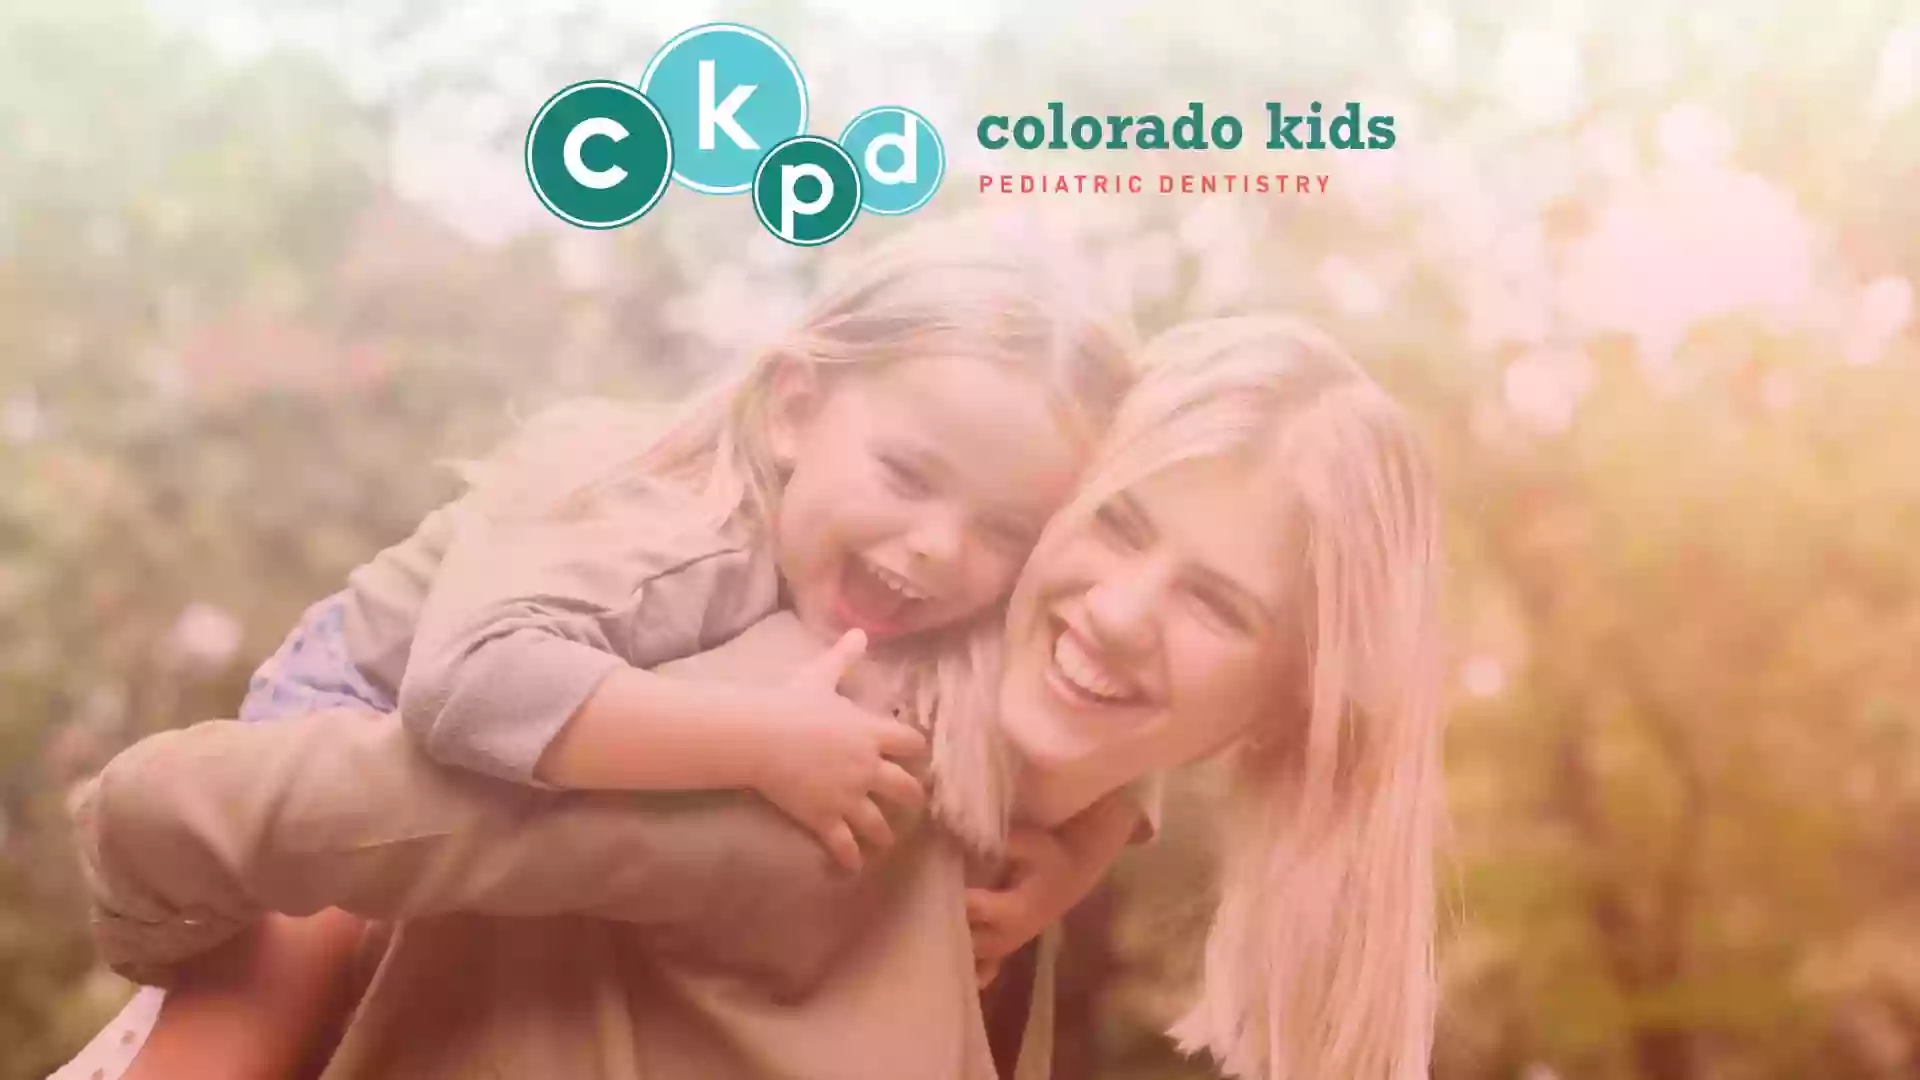 Colorado Kids Pediatric Dentistry: Norwood James R DDS